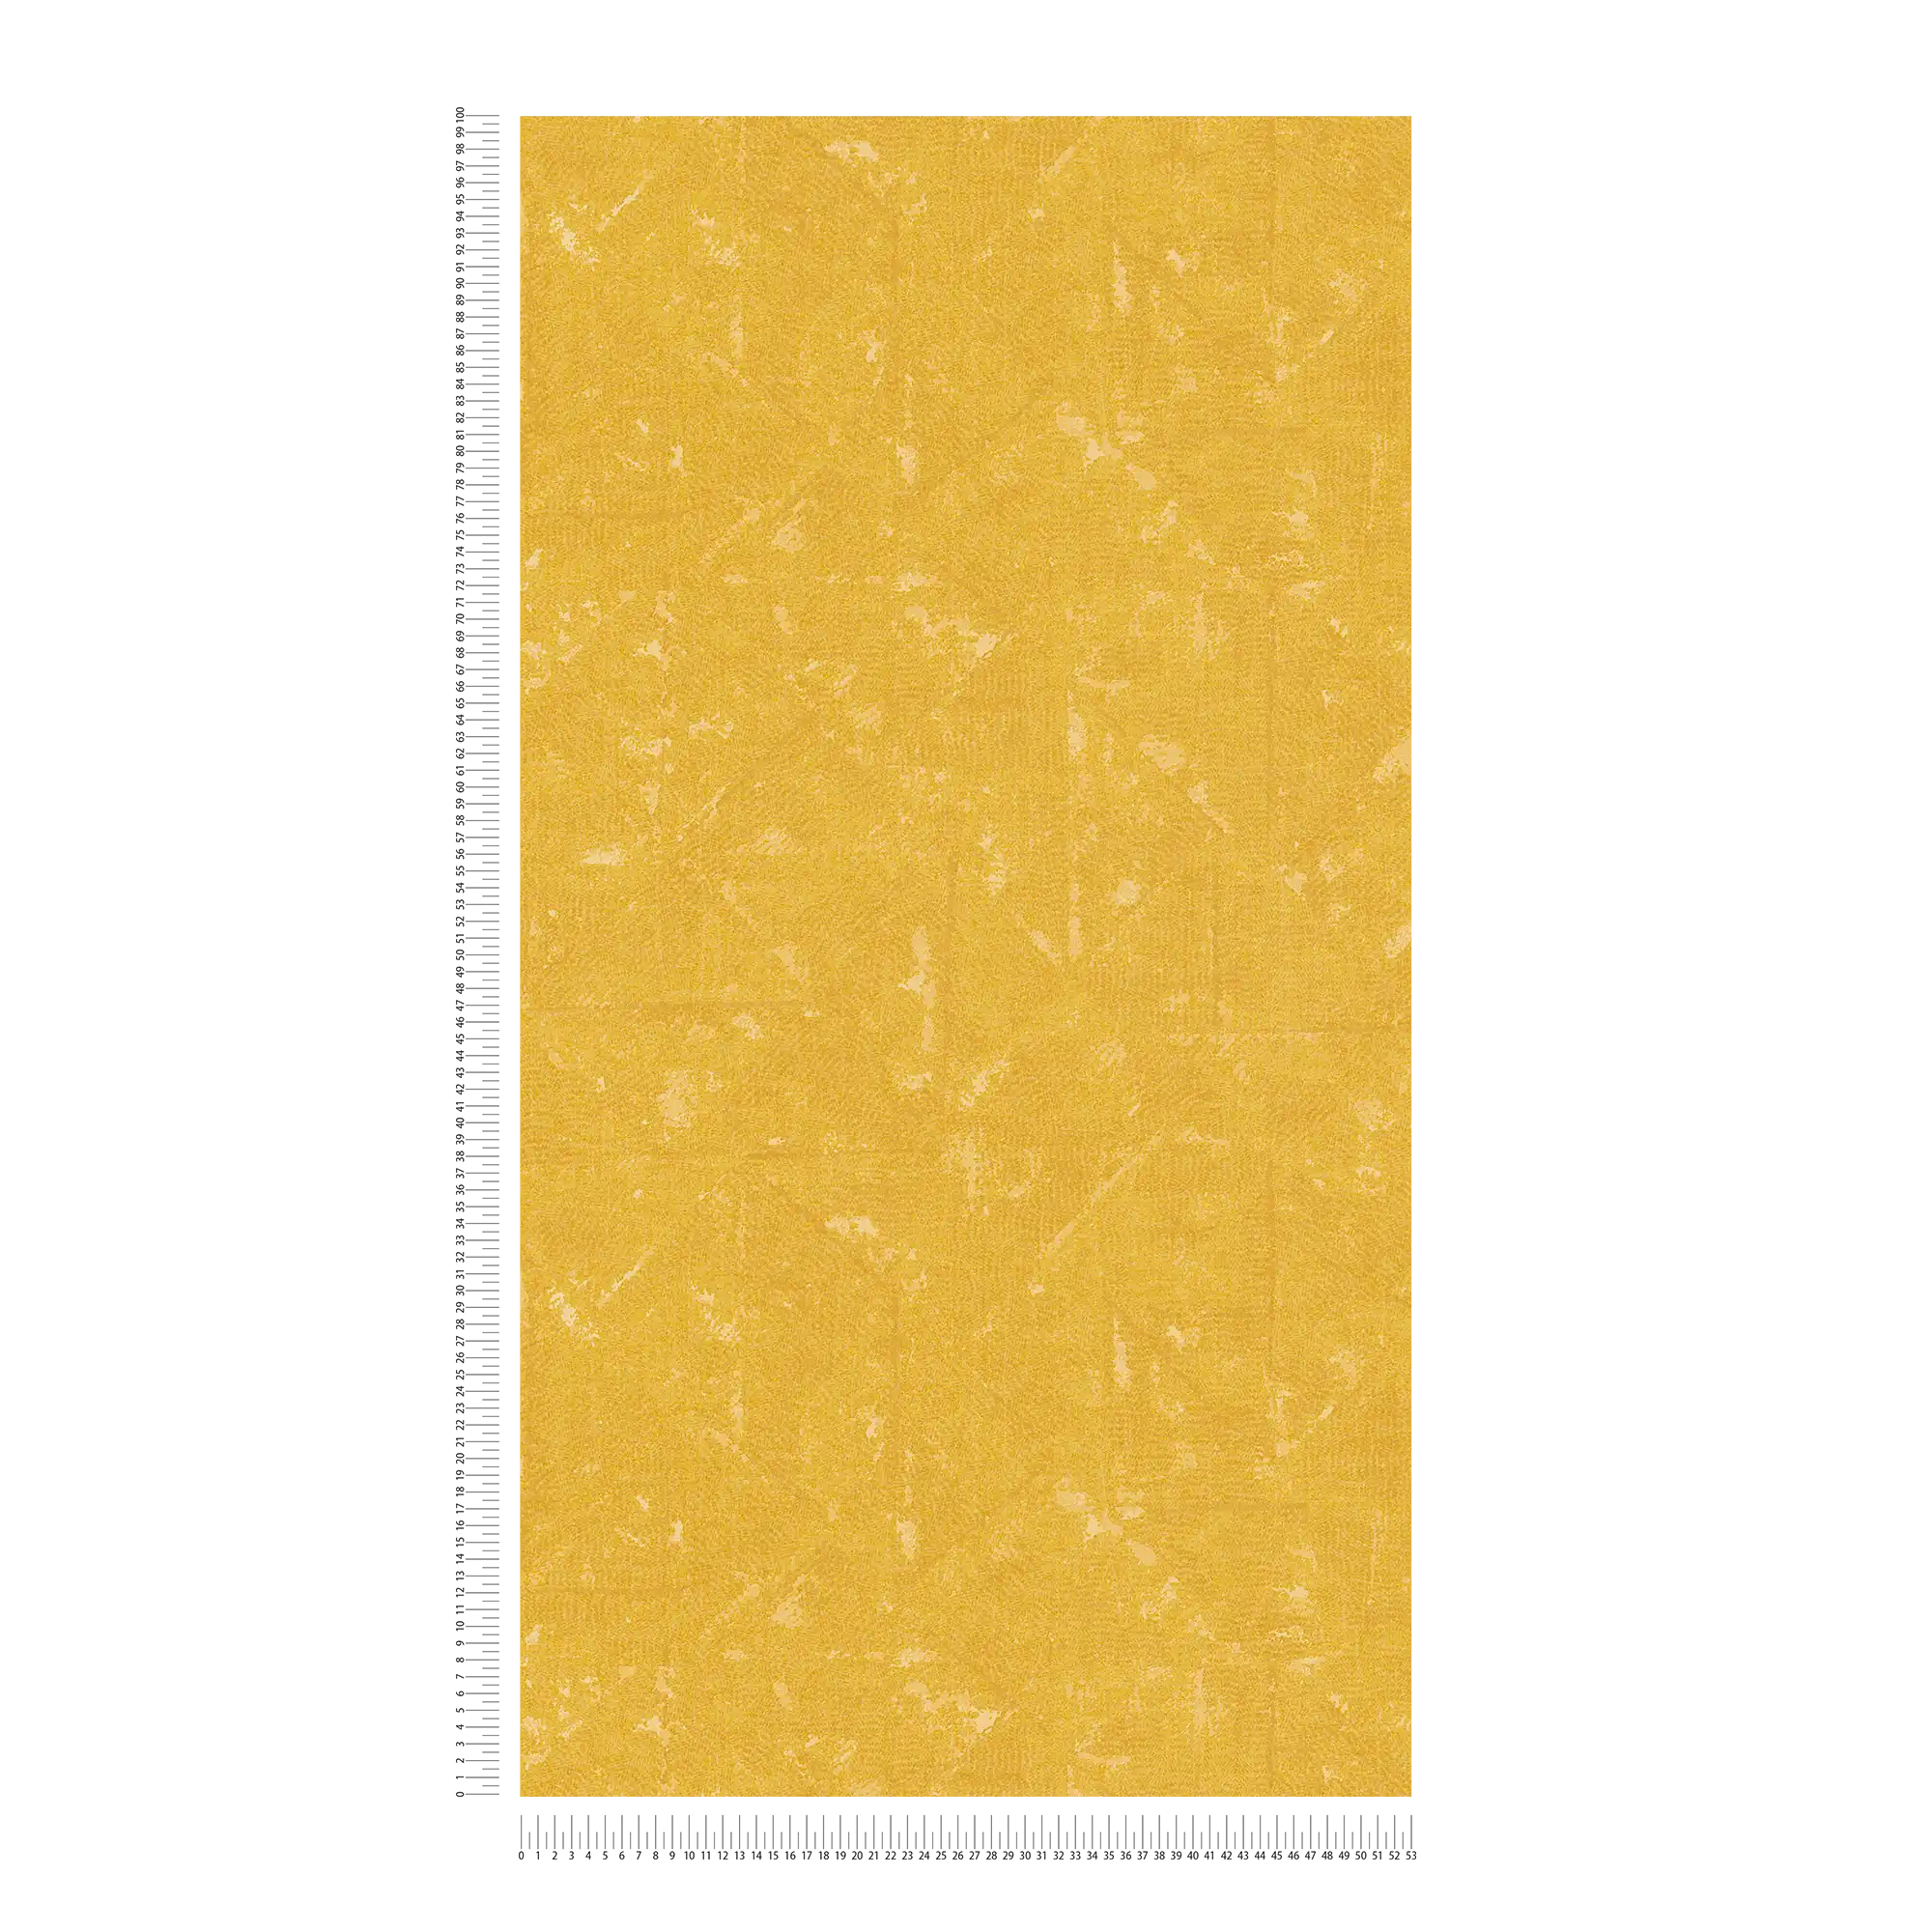             Wallpaper summer yellow, asymmetrical pattern - yellow
        